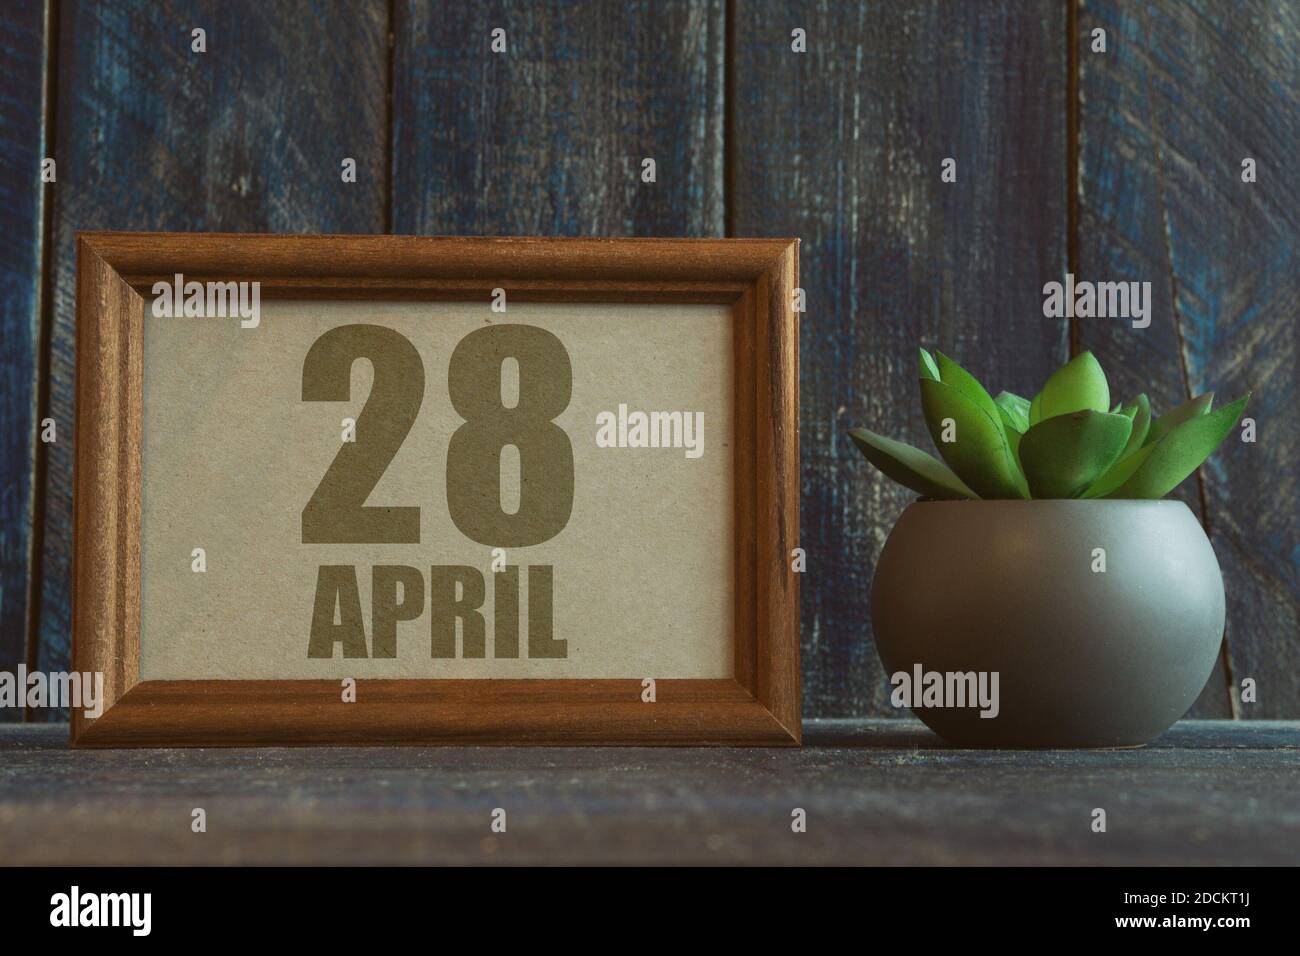 april. Tag 28 des Monats, Datum im Rahmen neben Sukkulente auf hölzernen Hintergrund Frühlingsmonat, Tag des Jahres Konzept. Stockfoto